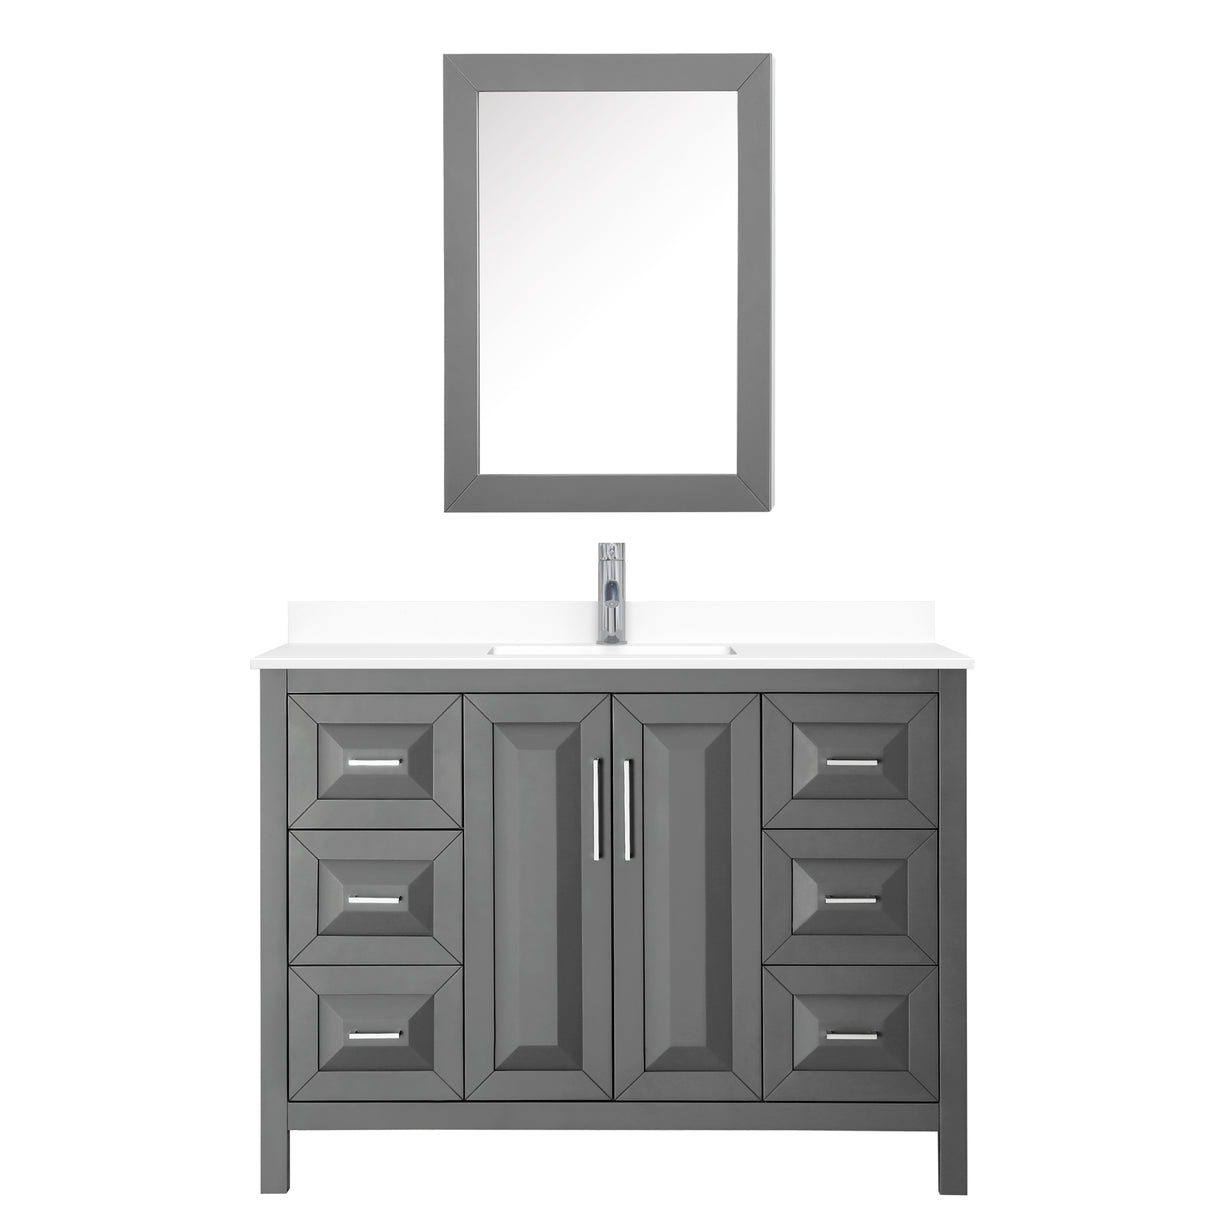 Daria 48 Inch Single Bathroom Vanity in Dark Gray White Cultured Marble Countertop Undermount Square Sink Medicine Cabinet